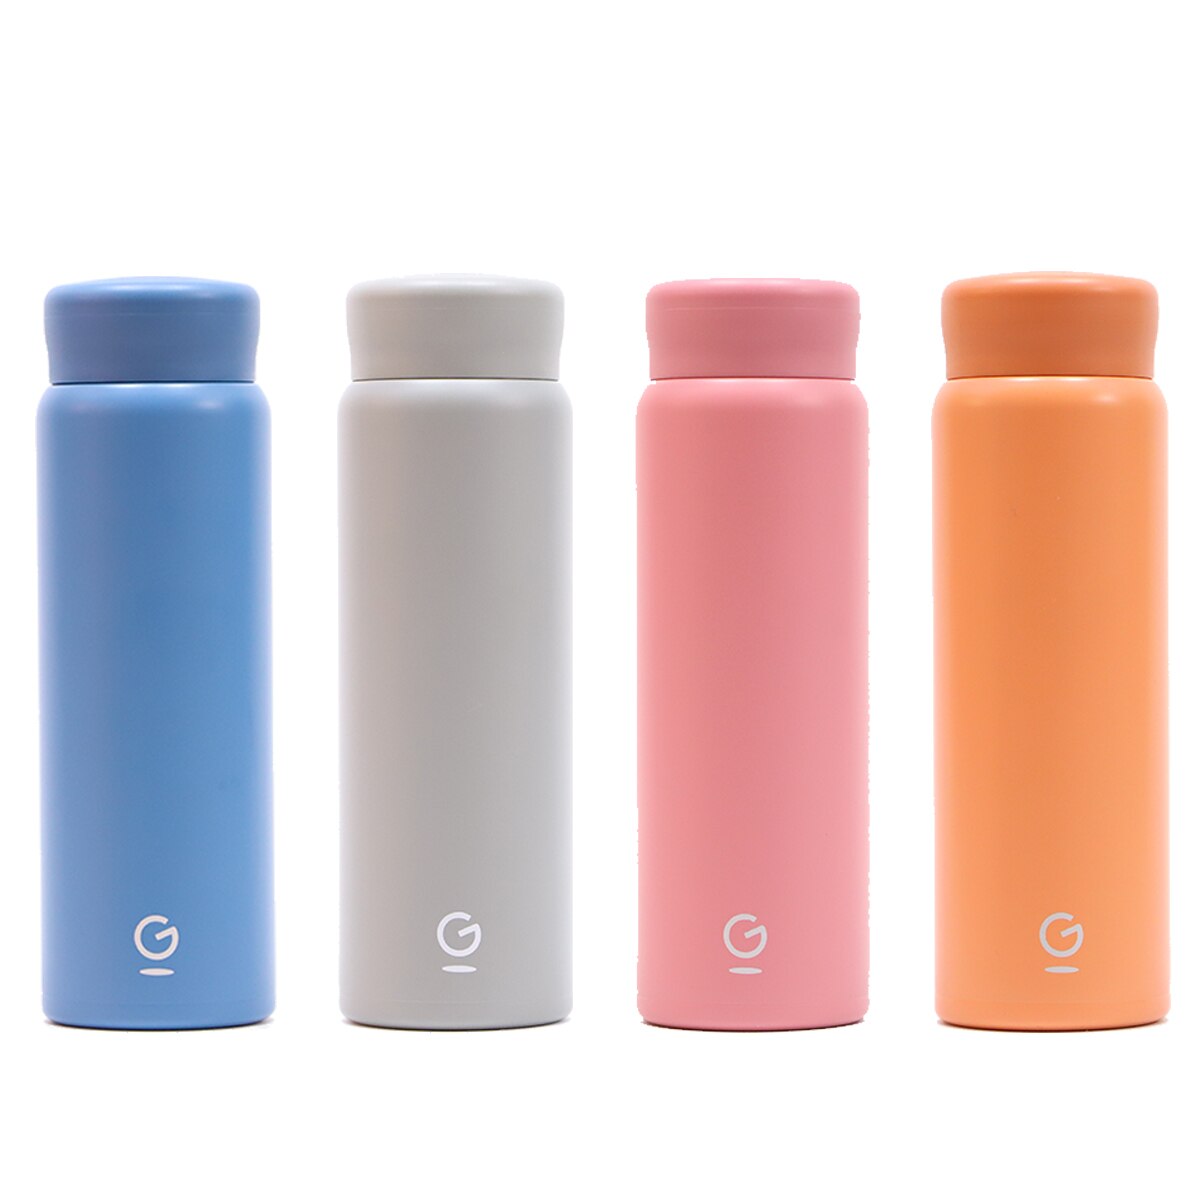 Qoo10] 【コパ公式】超軽量水筒 Gゼロマグボトル キッチン用品